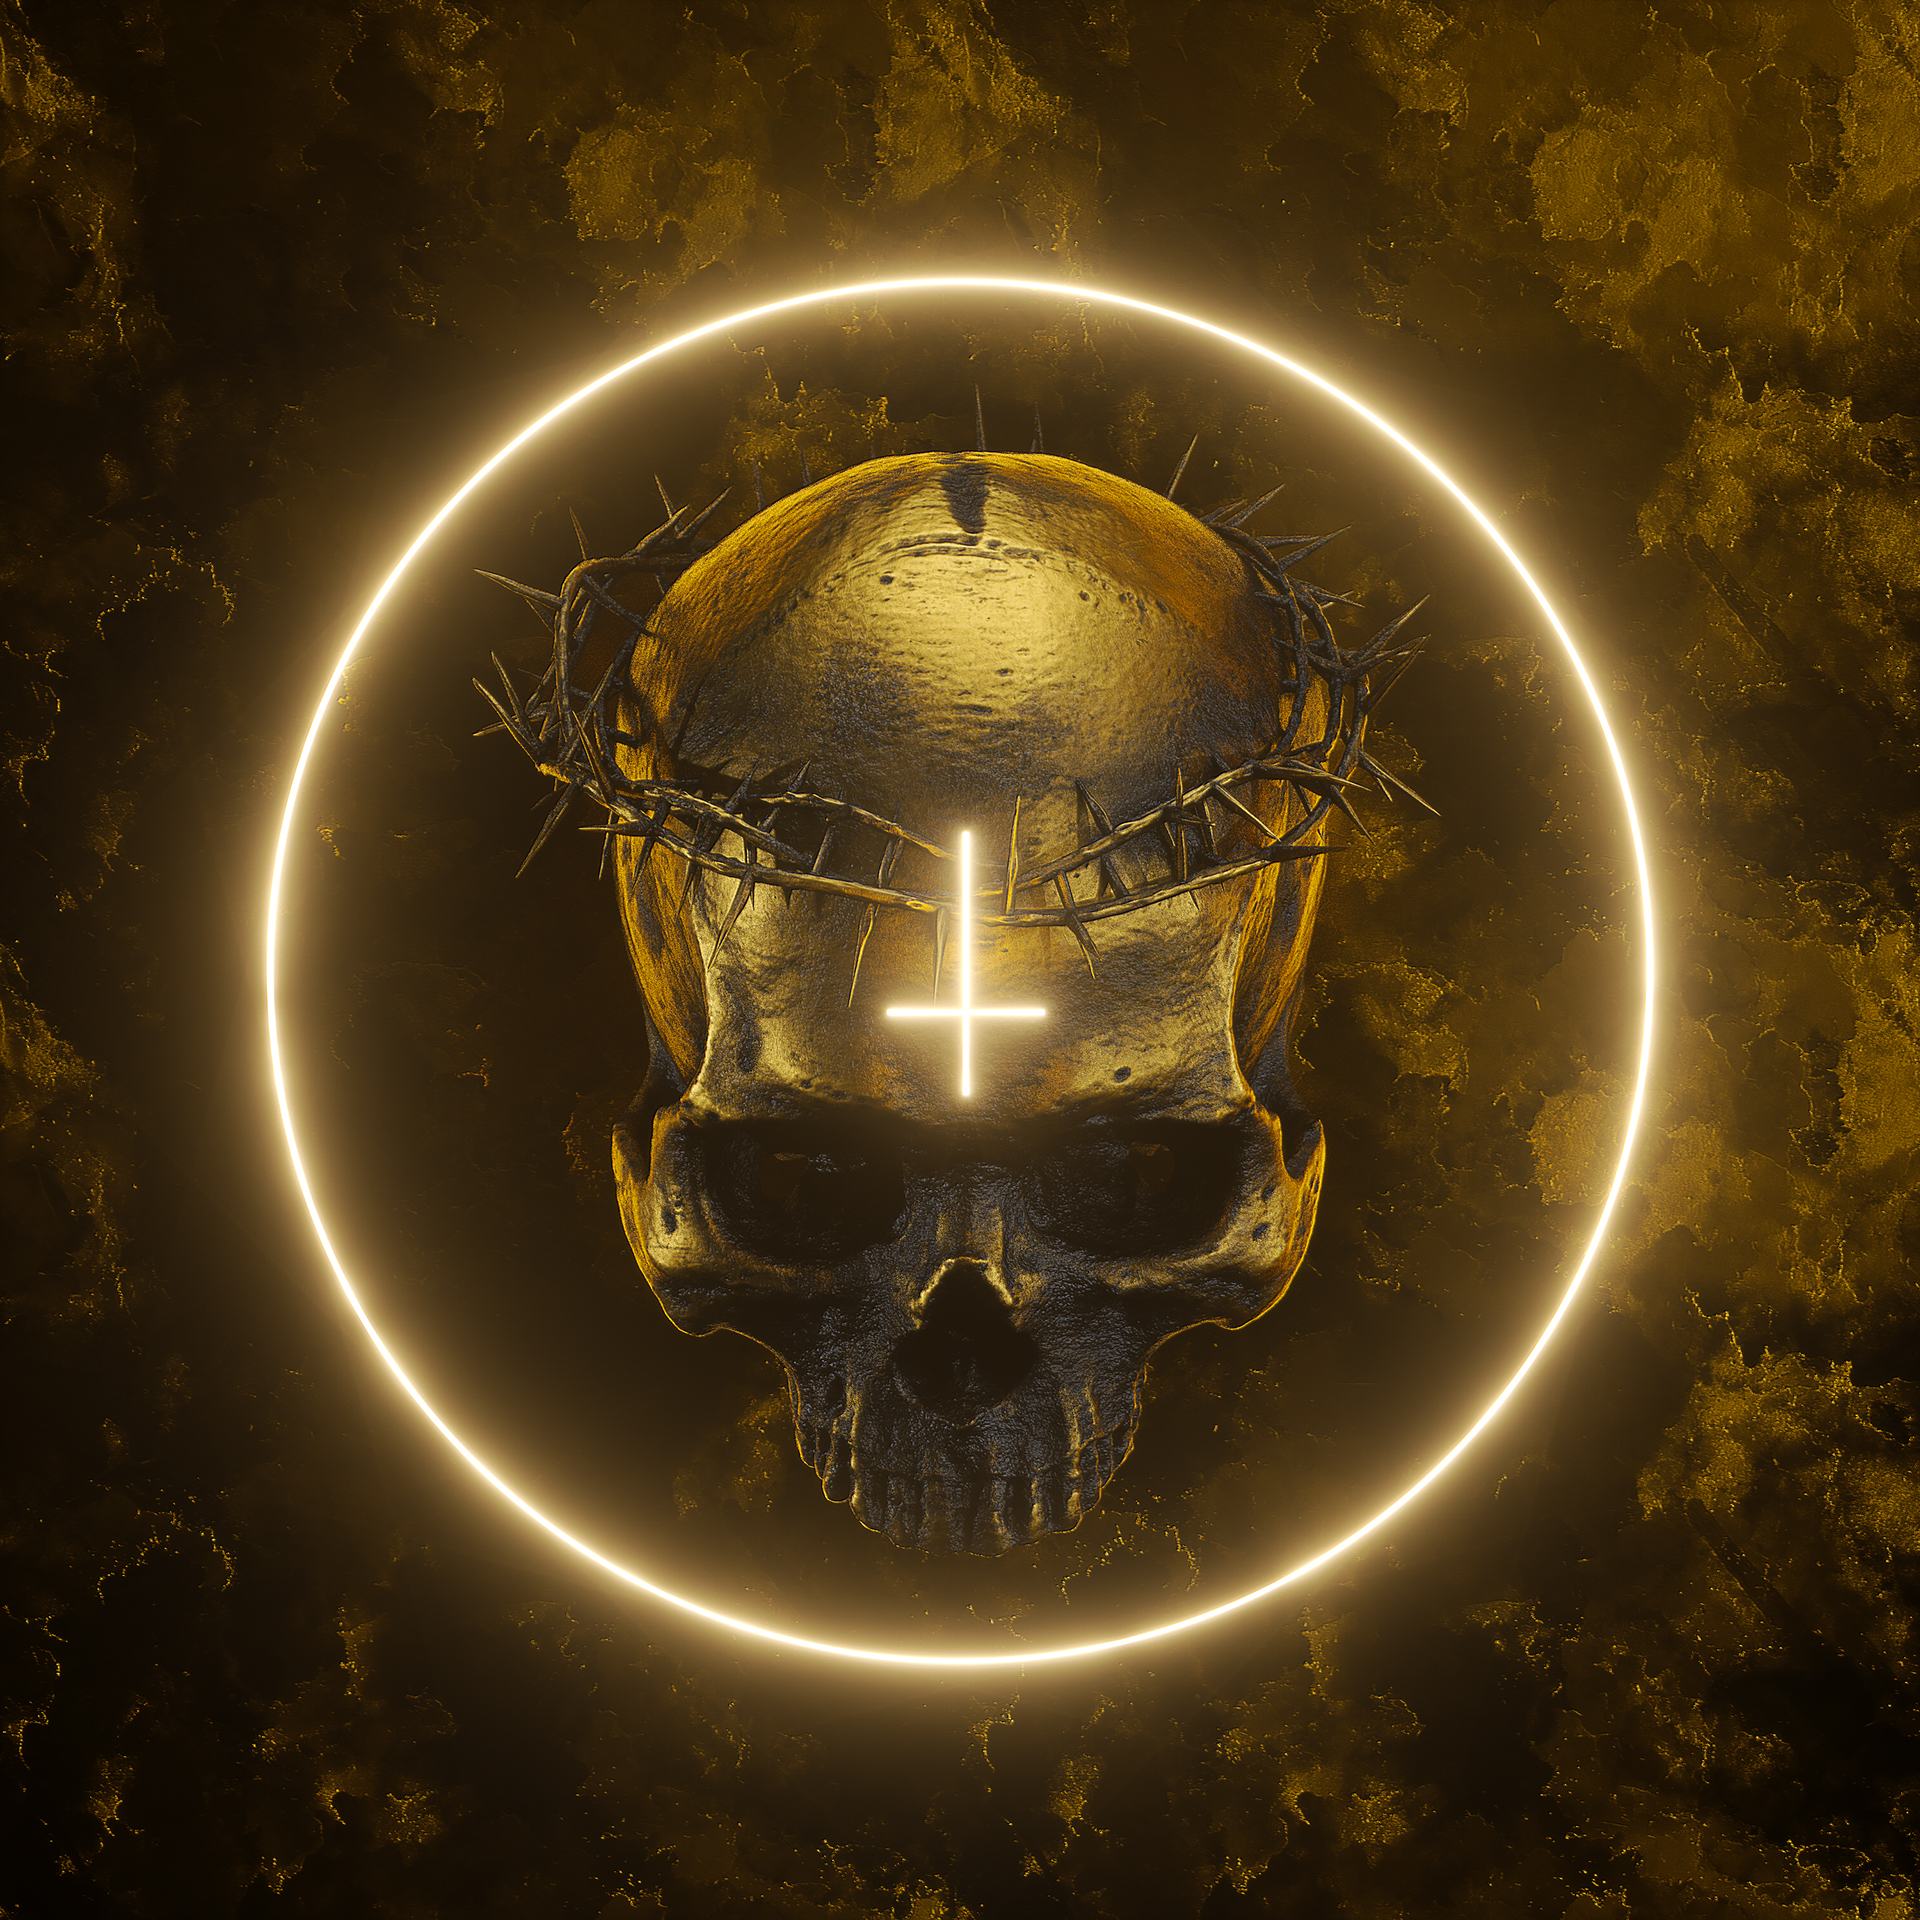 Billelis Skull Cult Gold 3D Artwork Digital 1920x1920